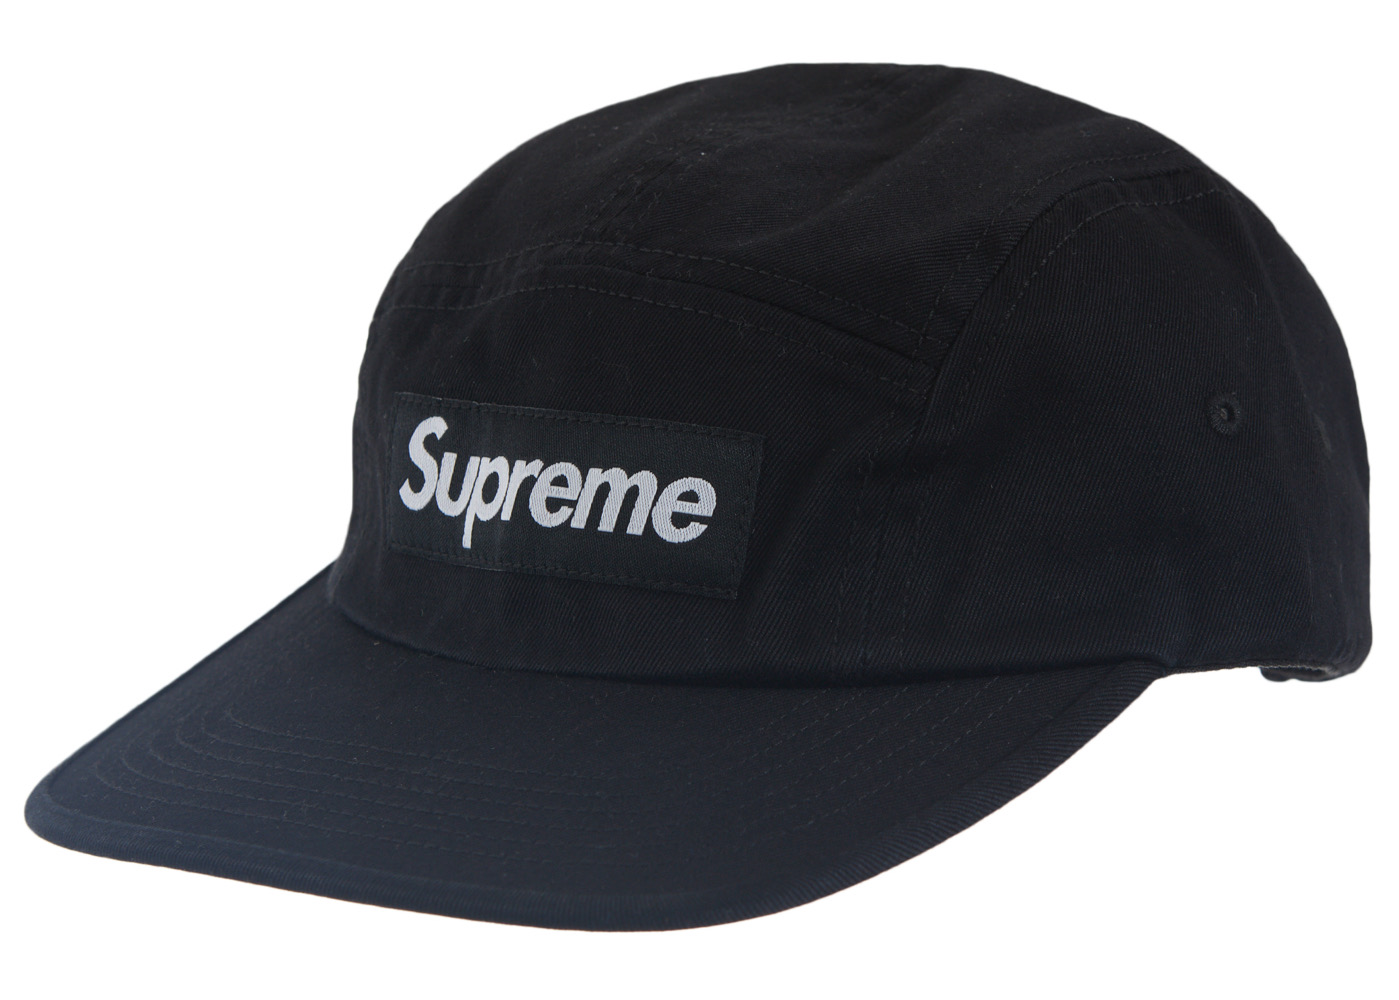 愛用 帽子 supreme cap 帽子 